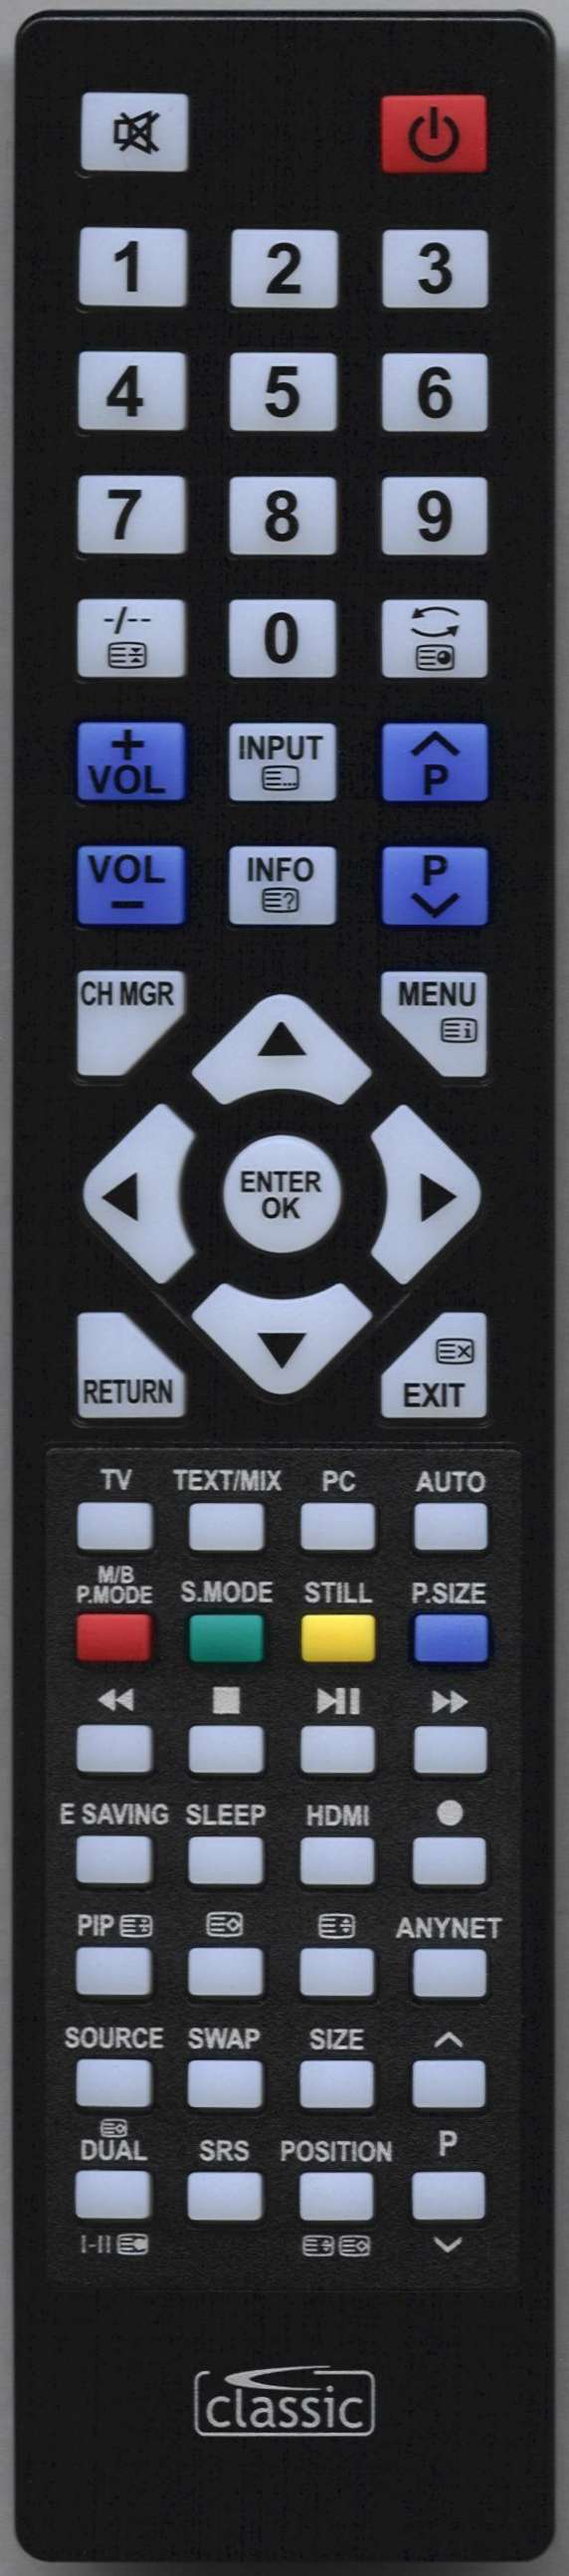 SAMSUNG PS50C91HM/XTL Remote Control